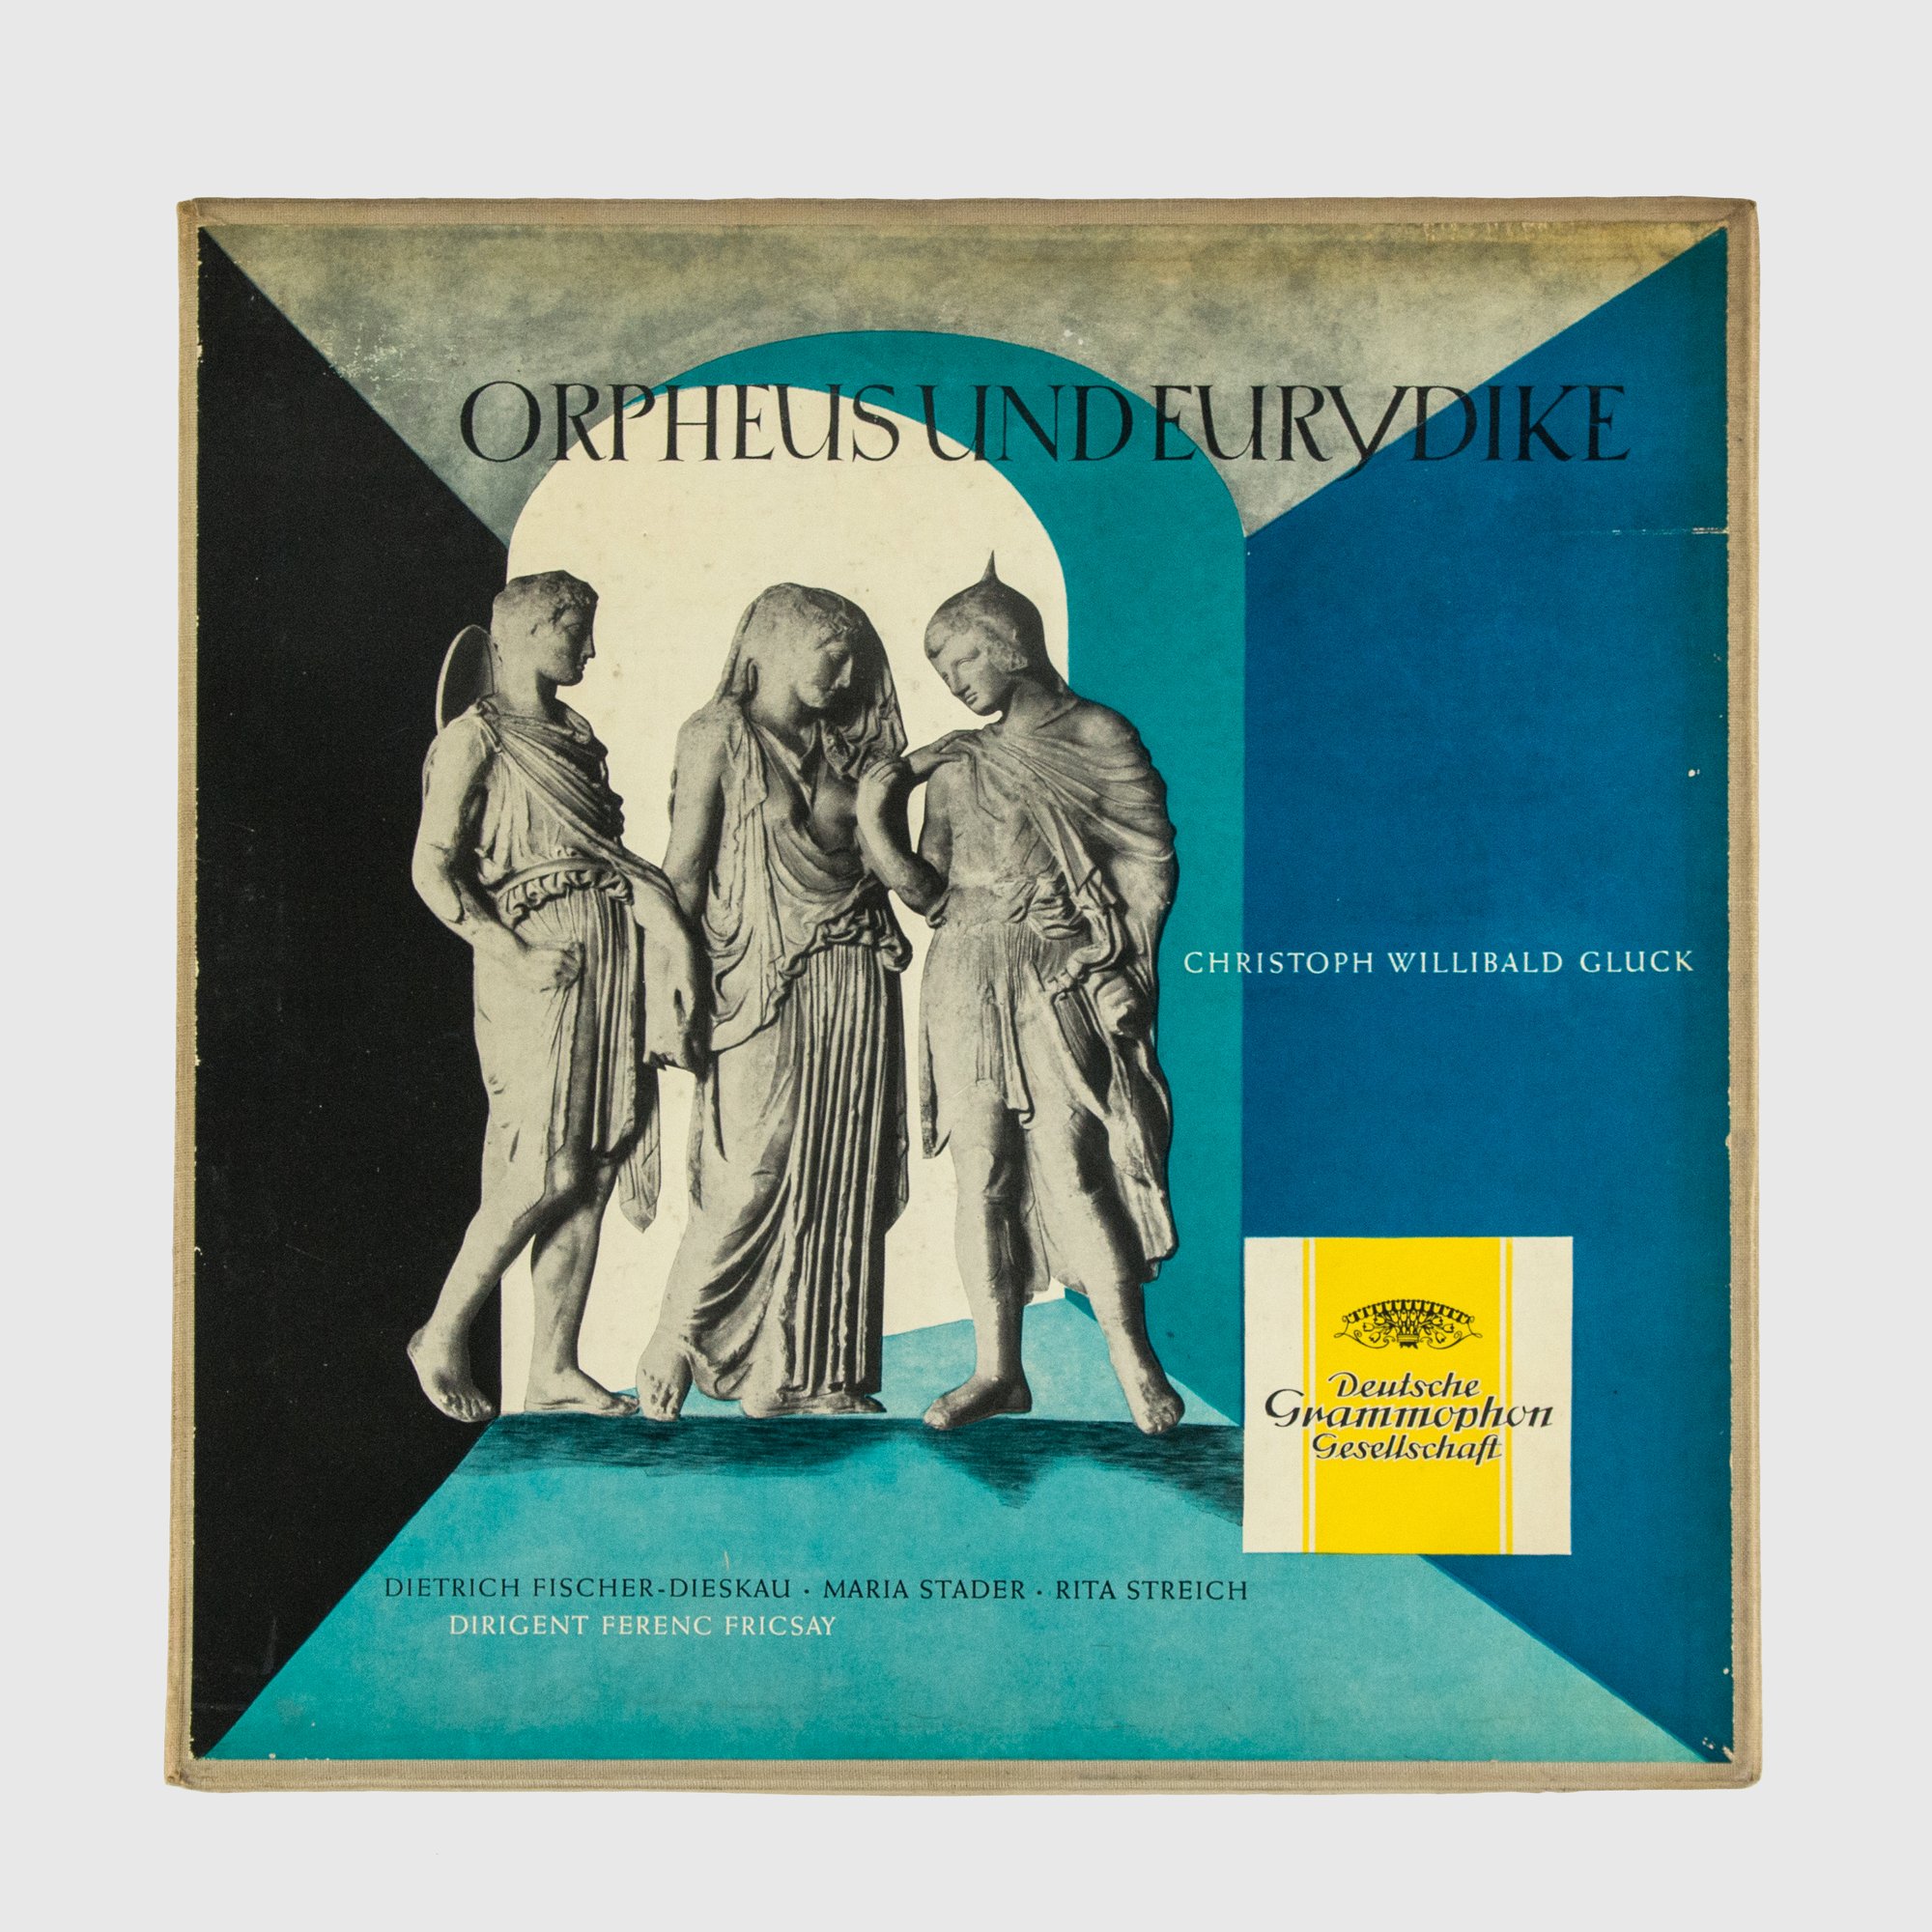 Colectie 2 viniluri Orpheus si Eurydike de Cristoph Willibald Gluck anii 60 Viniluri